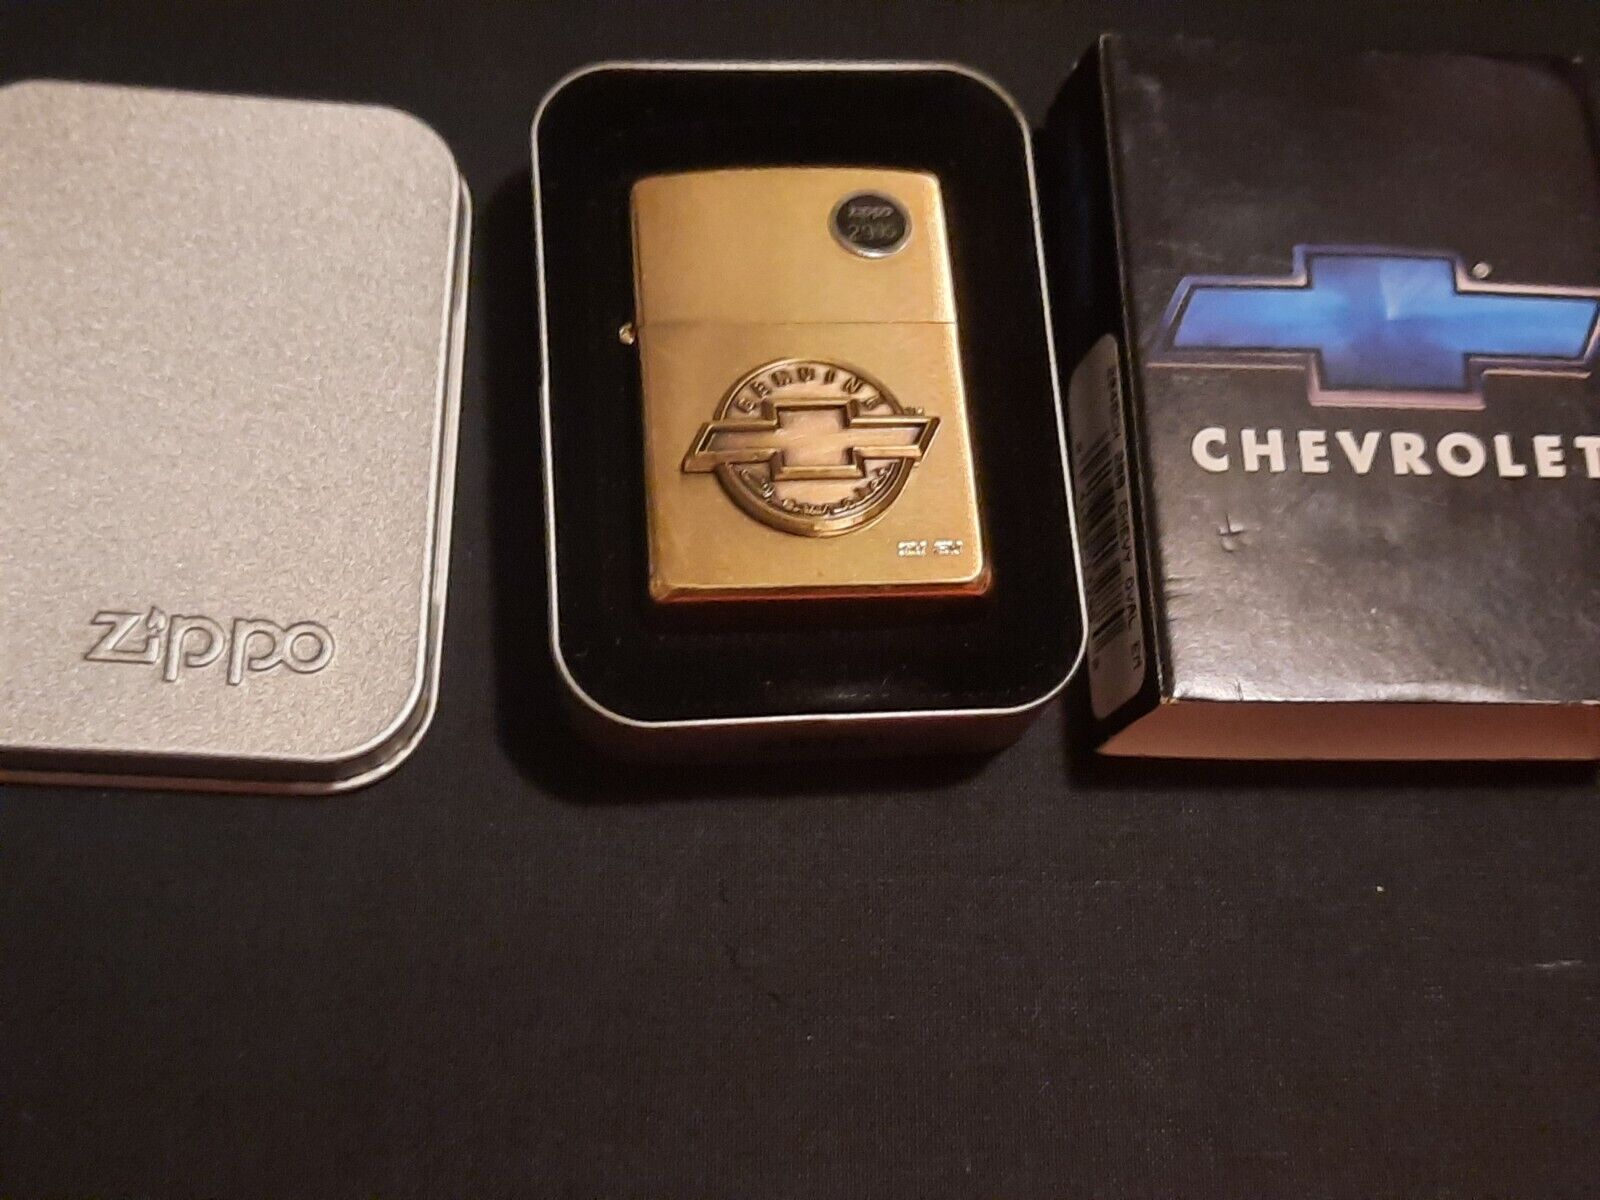 Zippo Lighter Chevy Oval Logo New Sealed w/ Original Box Chevrolet 2000